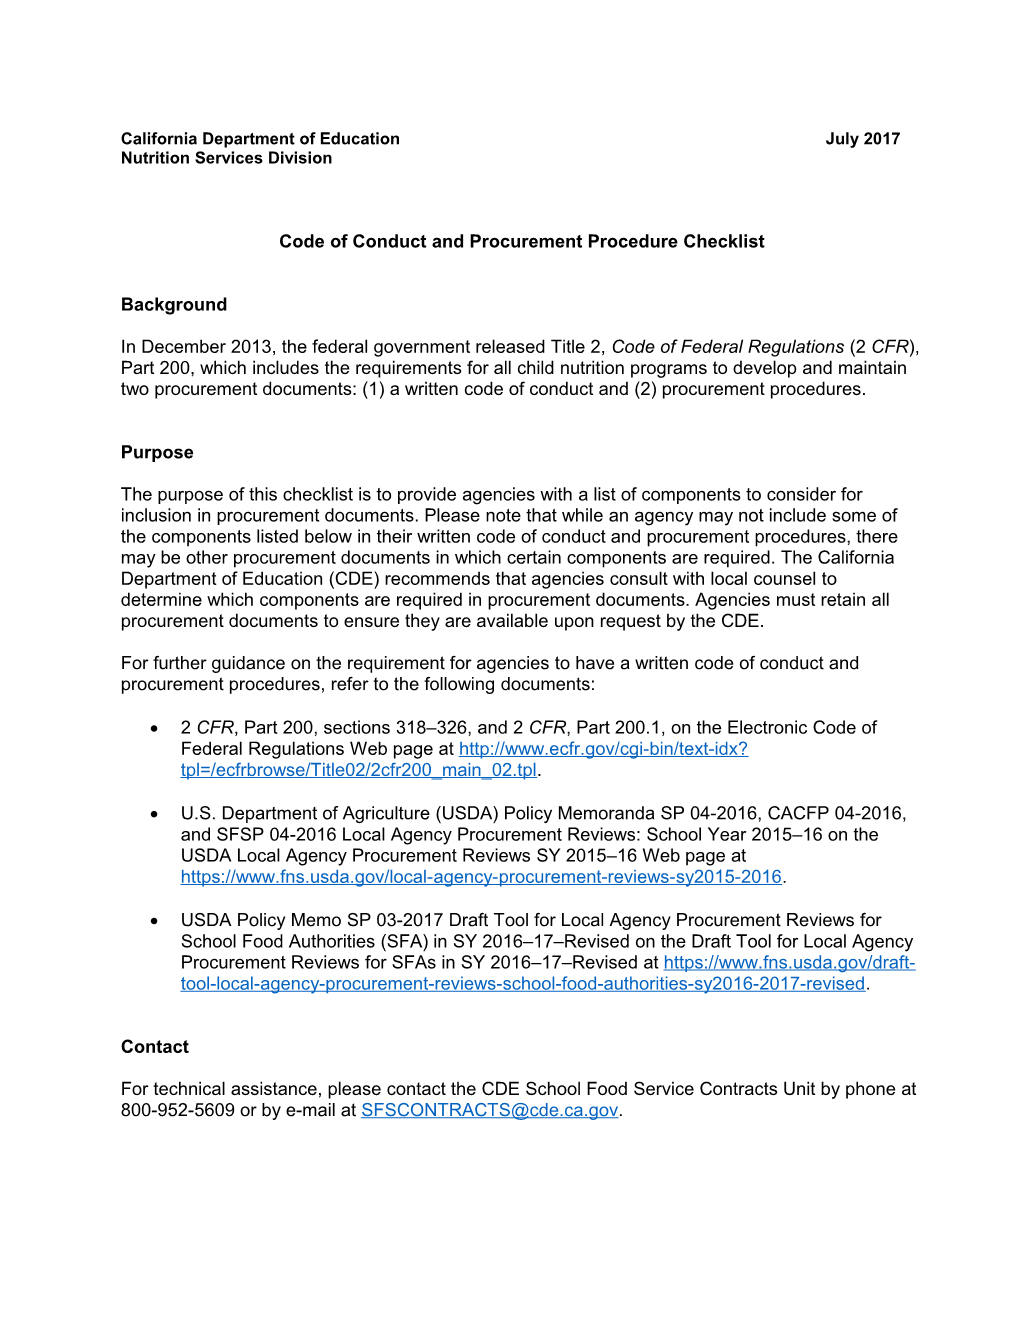 Procurement Procedures Checklist - Procurement in Child Nutrition Programs (CA Dept Of